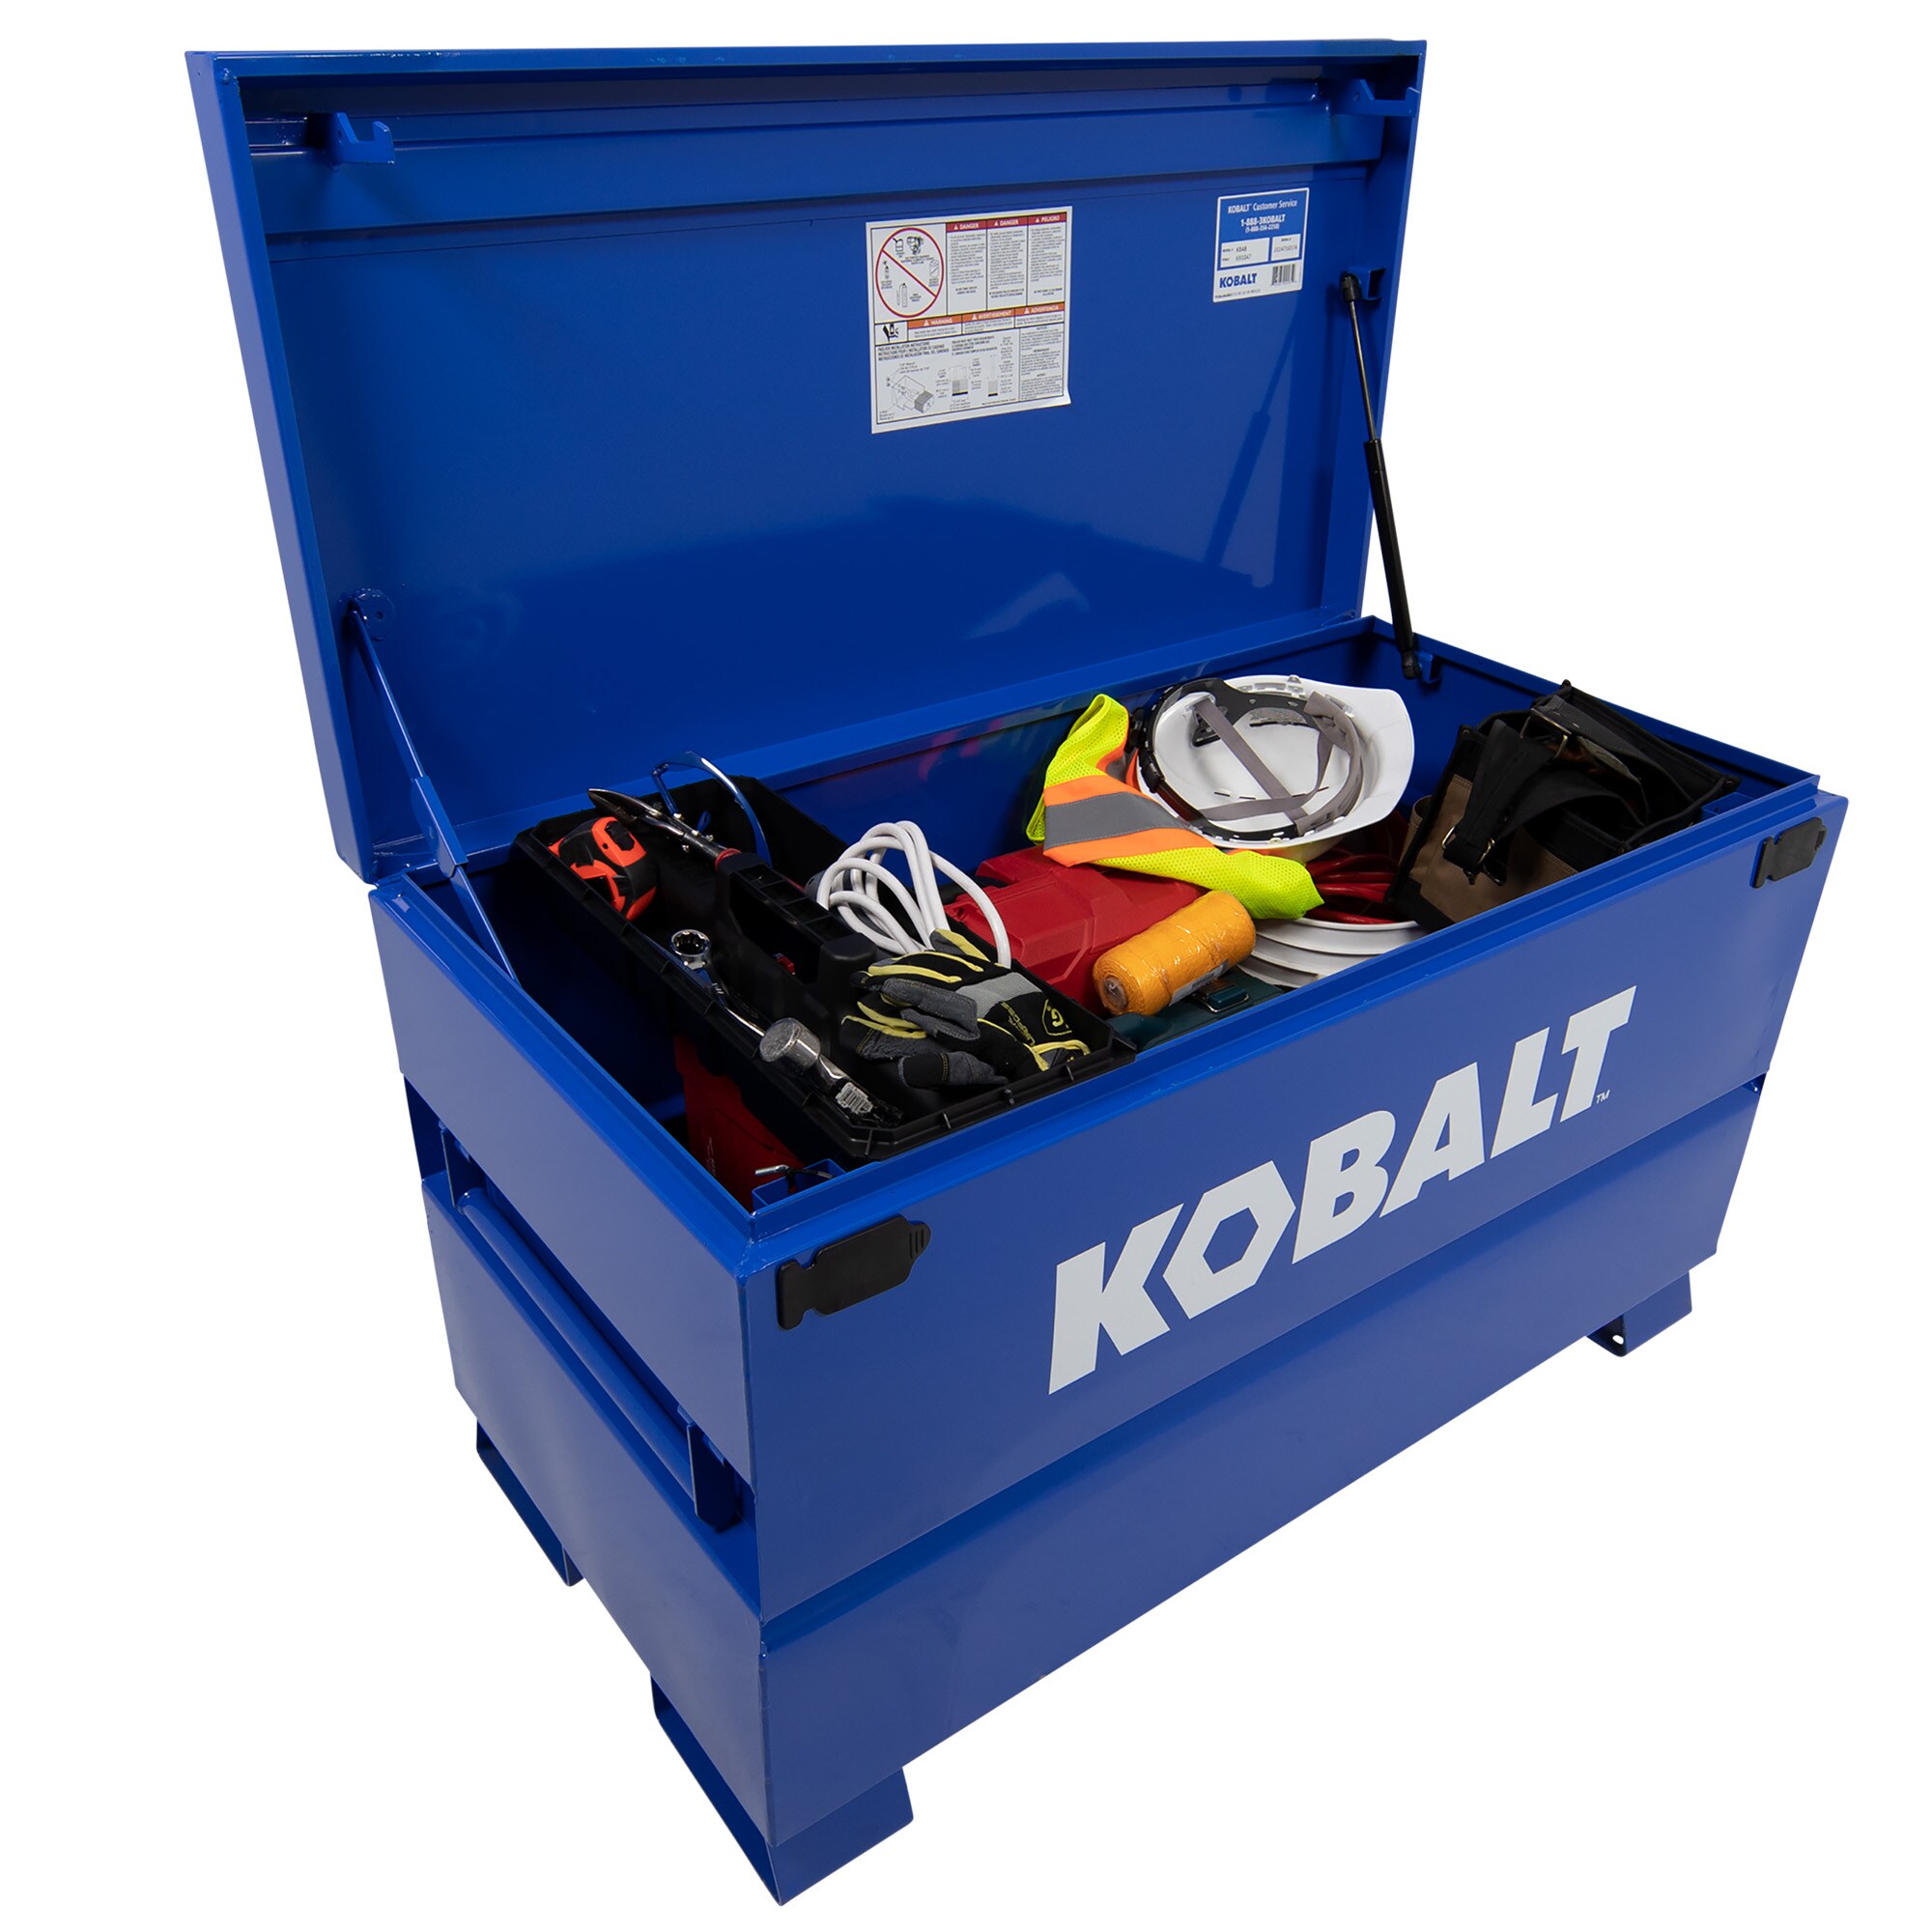 Kobalt 24 In W X 48 In L X 28 In H Steel Jobsite Box In The Jobsite